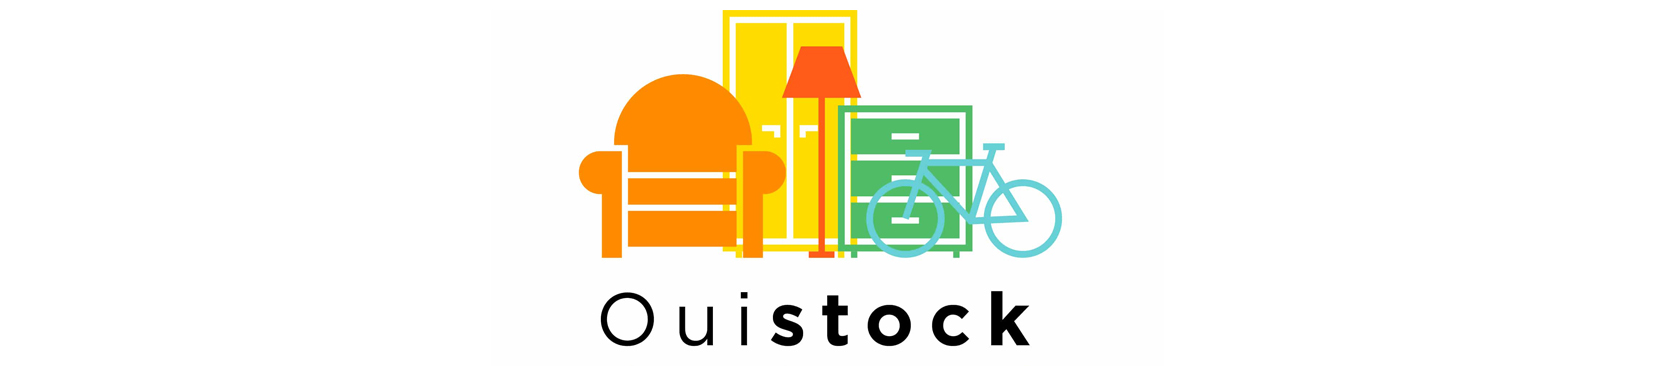 OuiStock